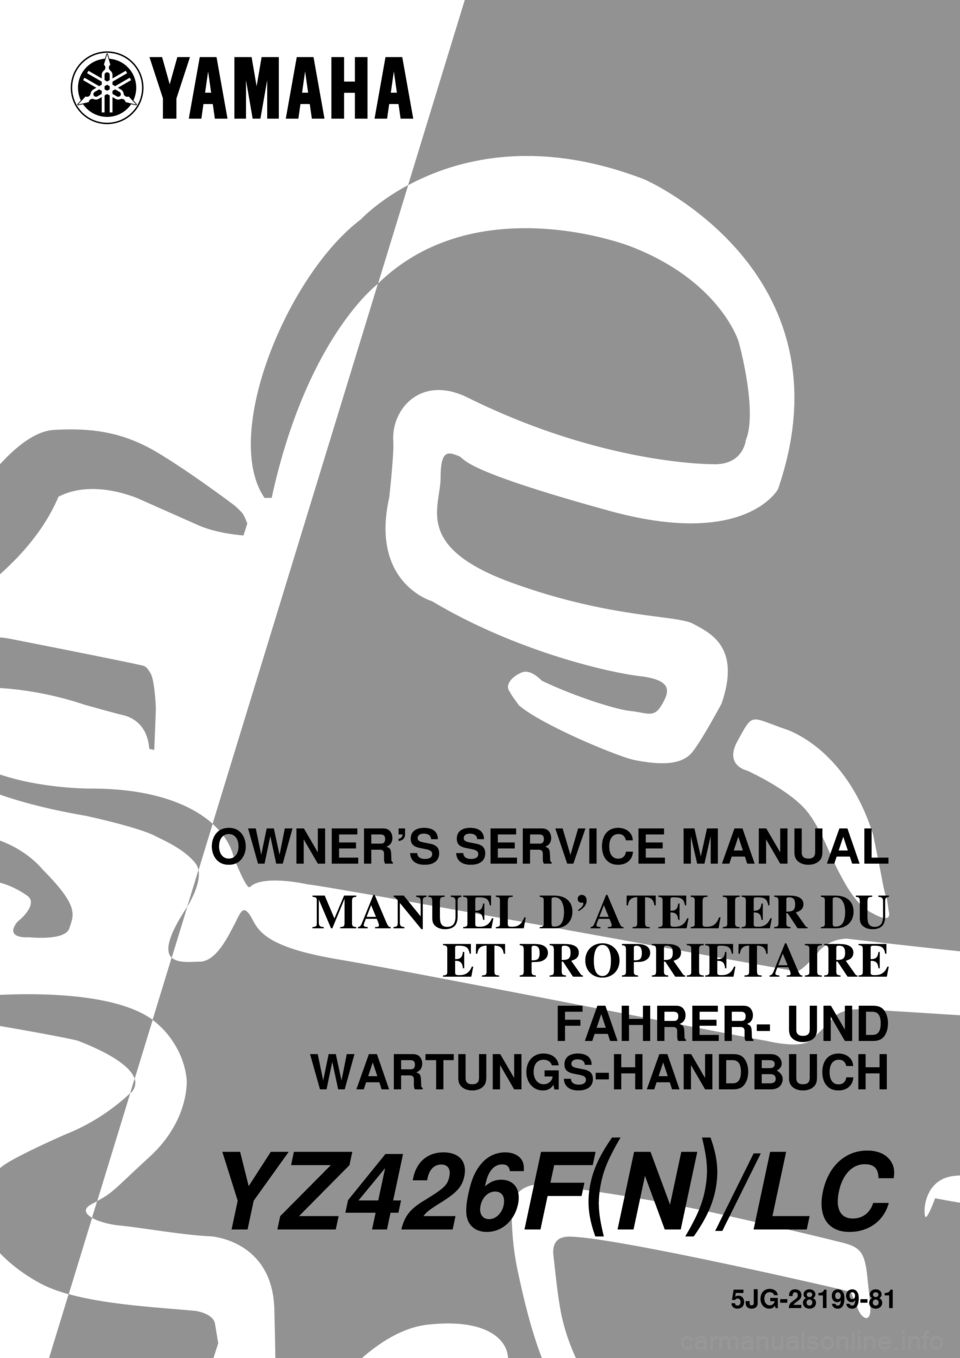 YAMAHA YZ426F 2001  Betriebsanleitungen (in German)      
 
 
 
5JG-28199-81
YZ426F(N)/LC
OWNER’S SERVICE MANUAL
MANUEL D’ATELIER DU
ET PROPRIETAIRE
FAHRER- UND
WARTUNGS-HANDBUCH 